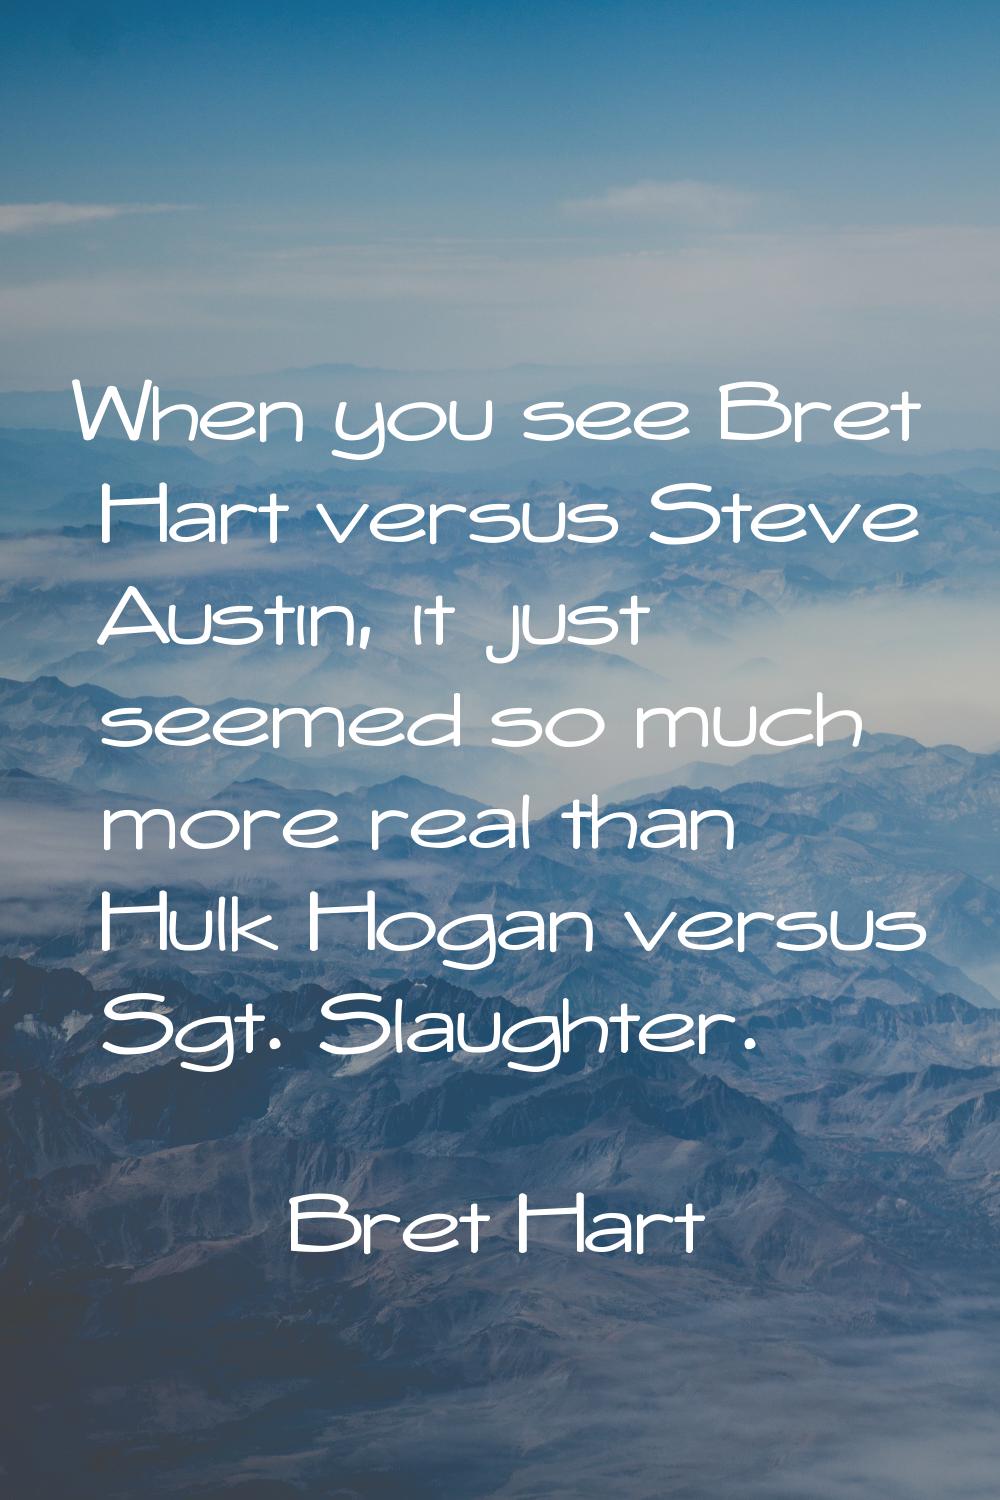 When you see Bret Hart versus Steve Austin, it just seemed so much more real than Hulk Hogan versus